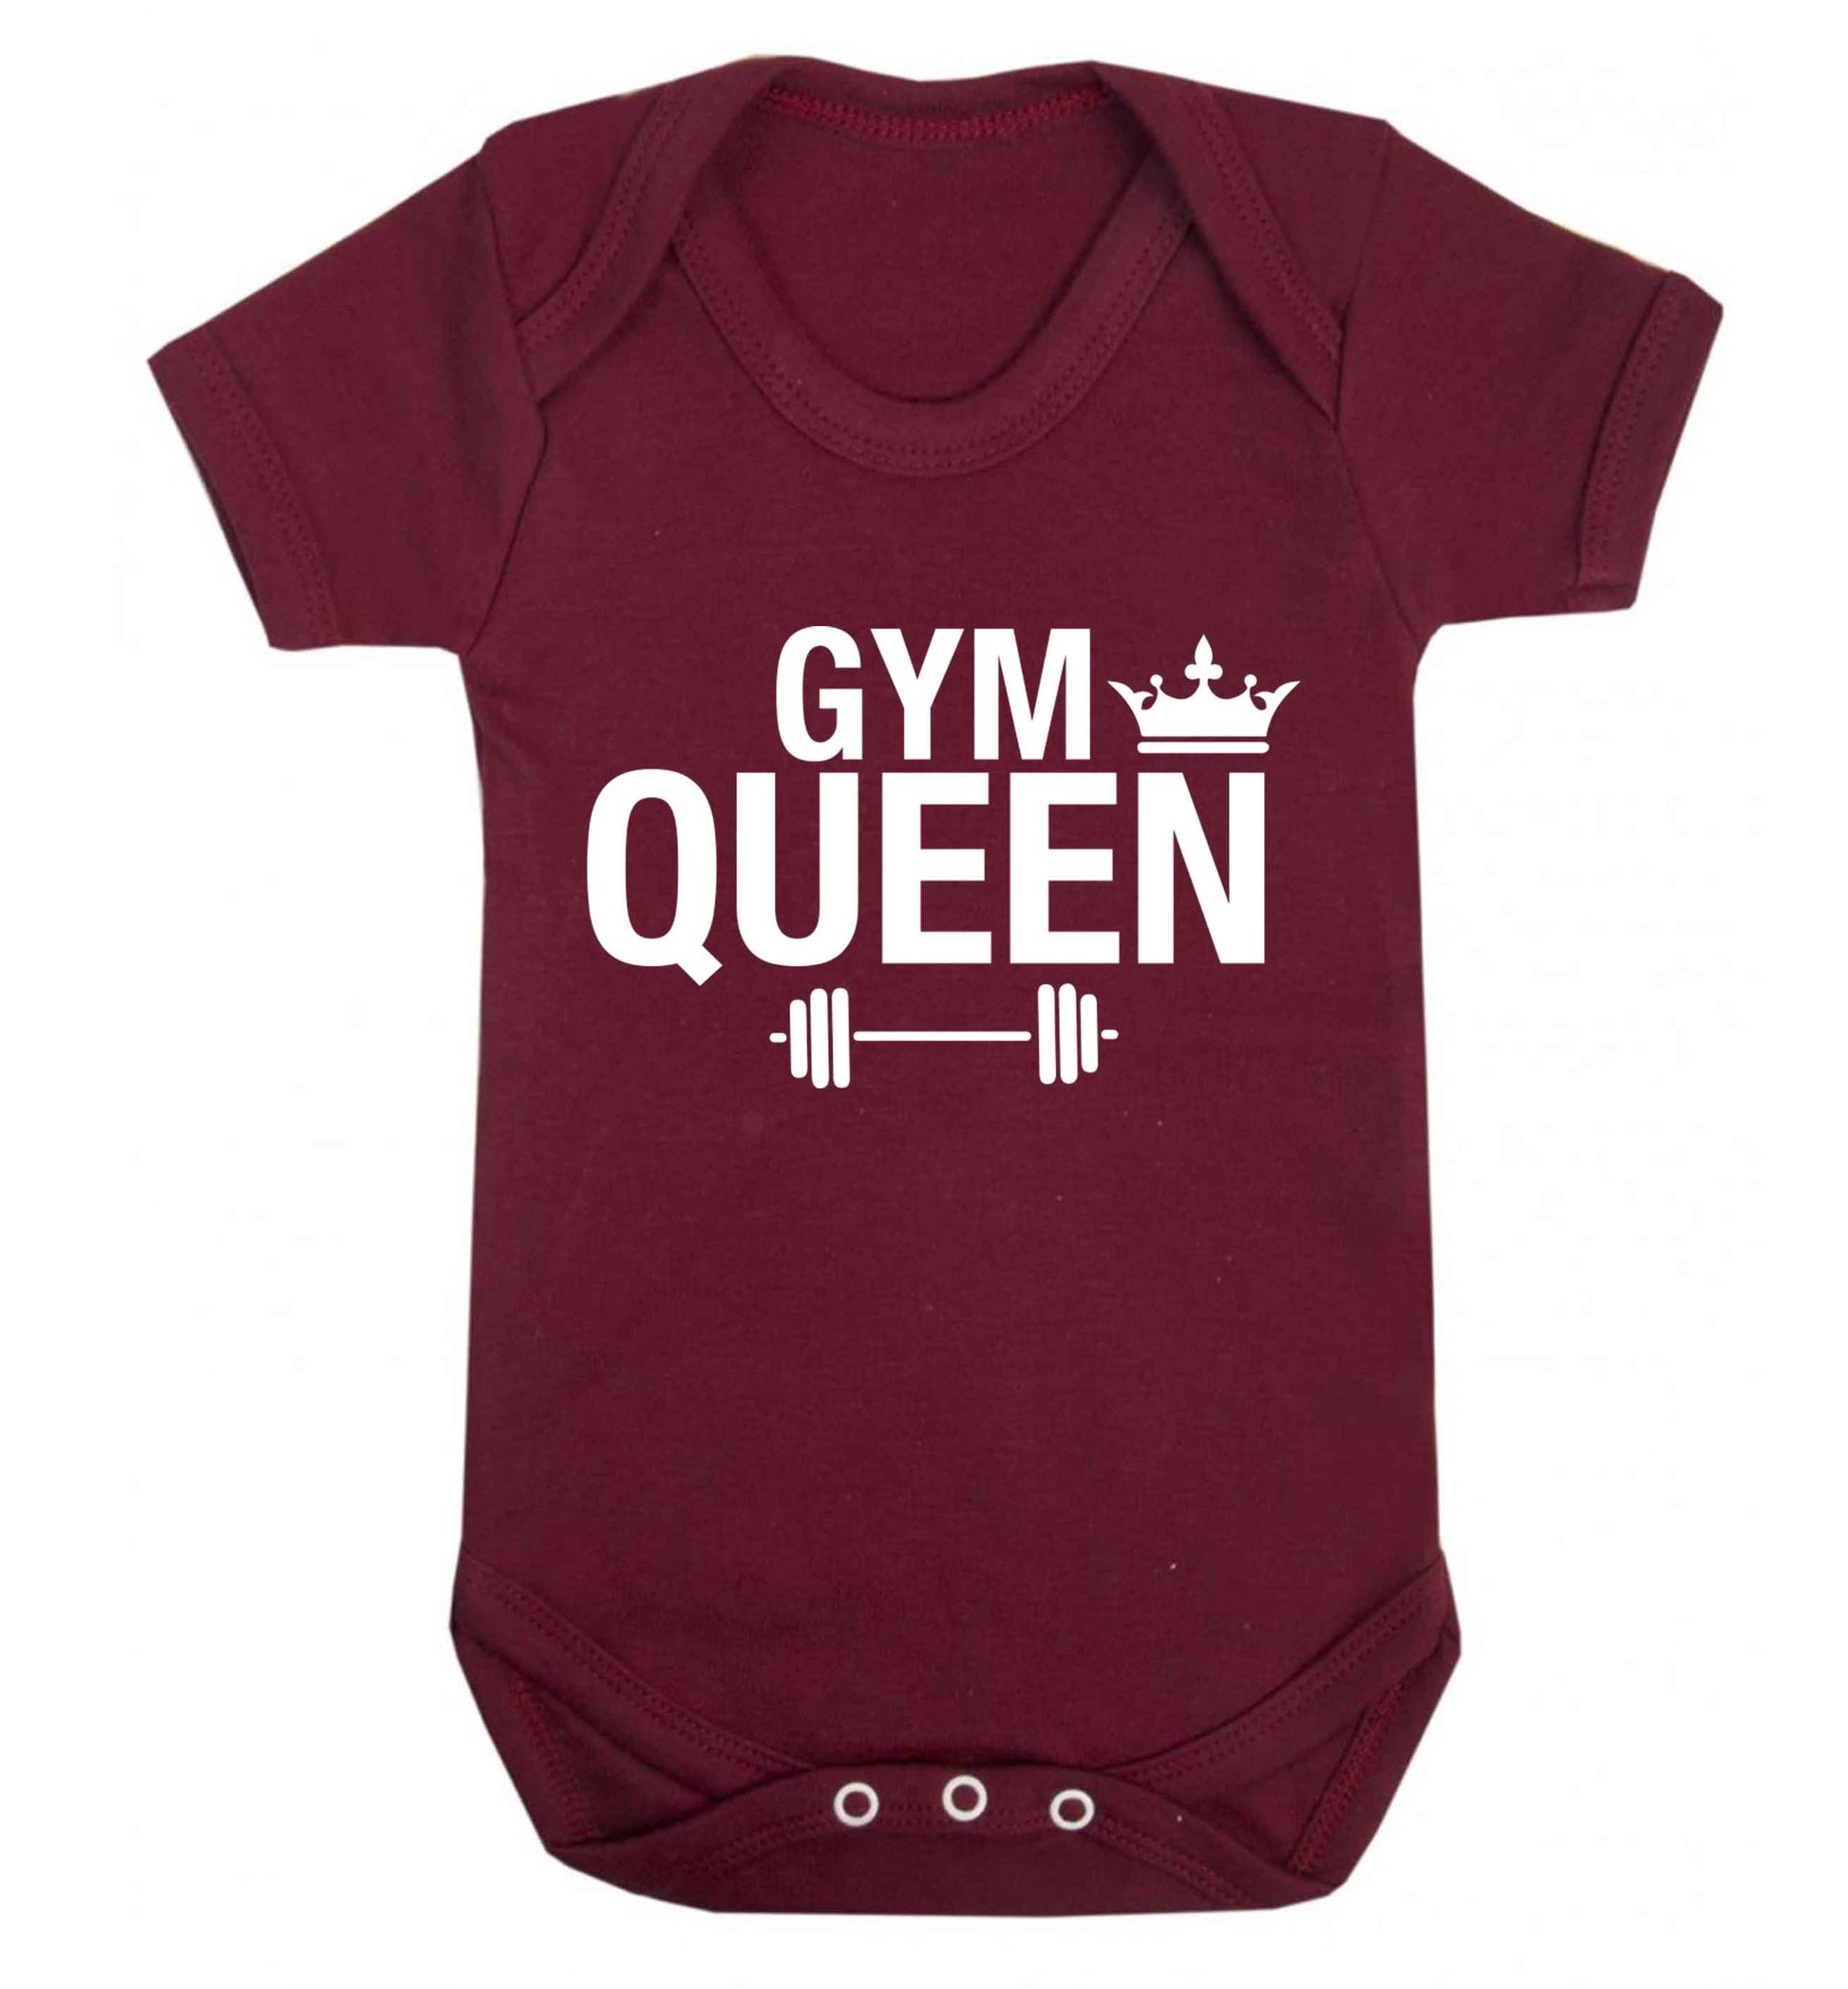 Gym queen Baby Vest maroon 18-24 months